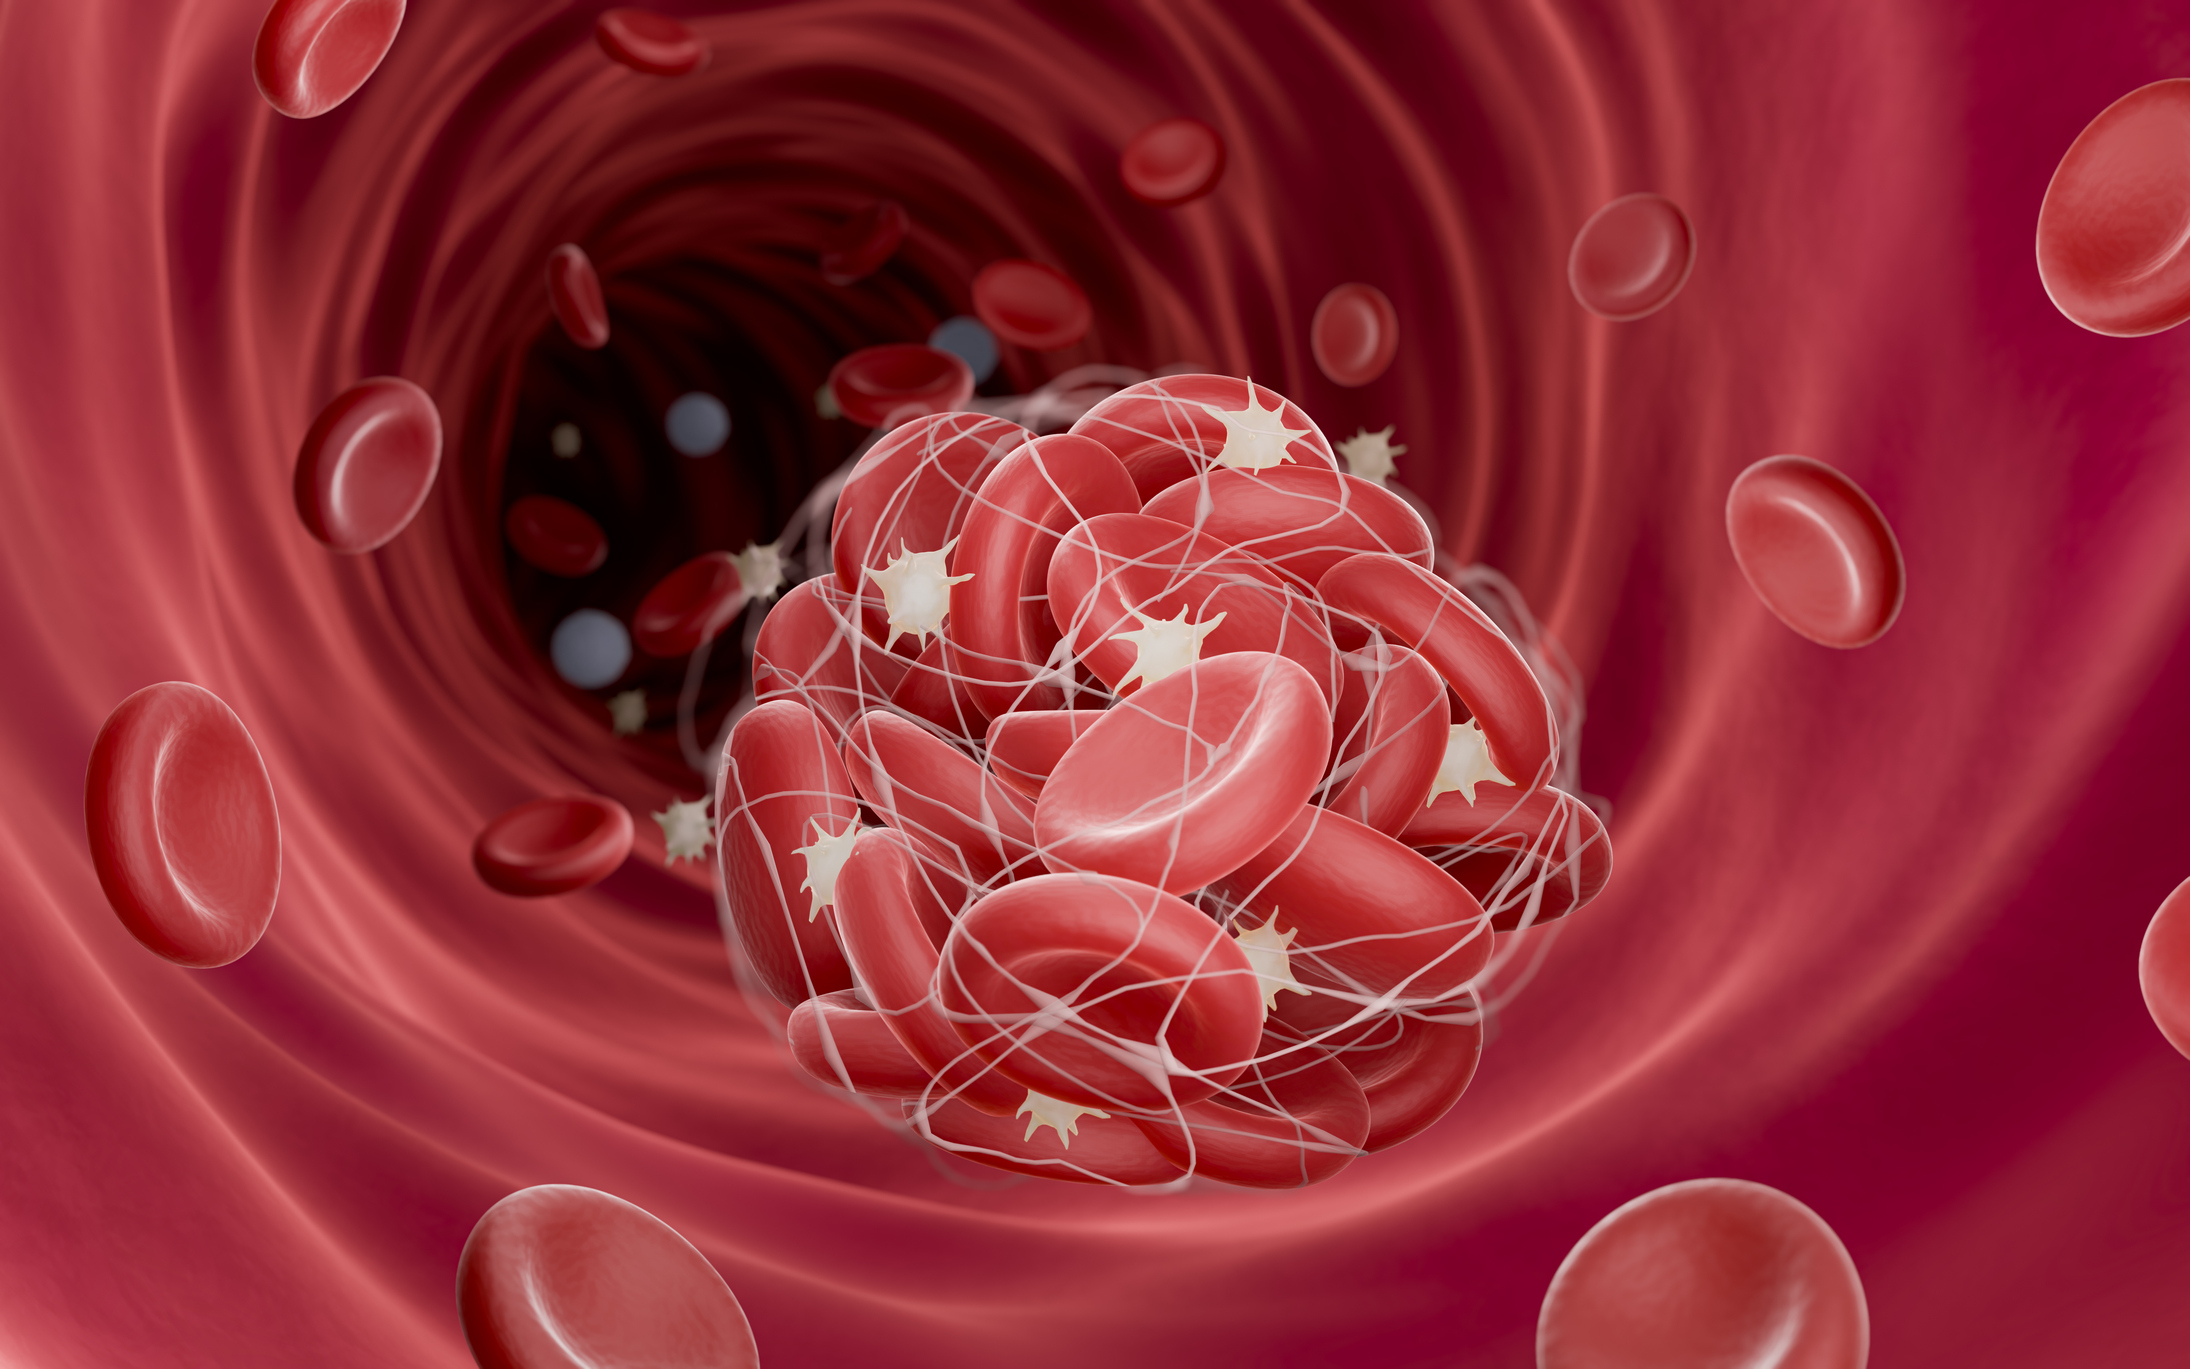 Digital illustration of a blood clot inside a blood vessel with red blood cells